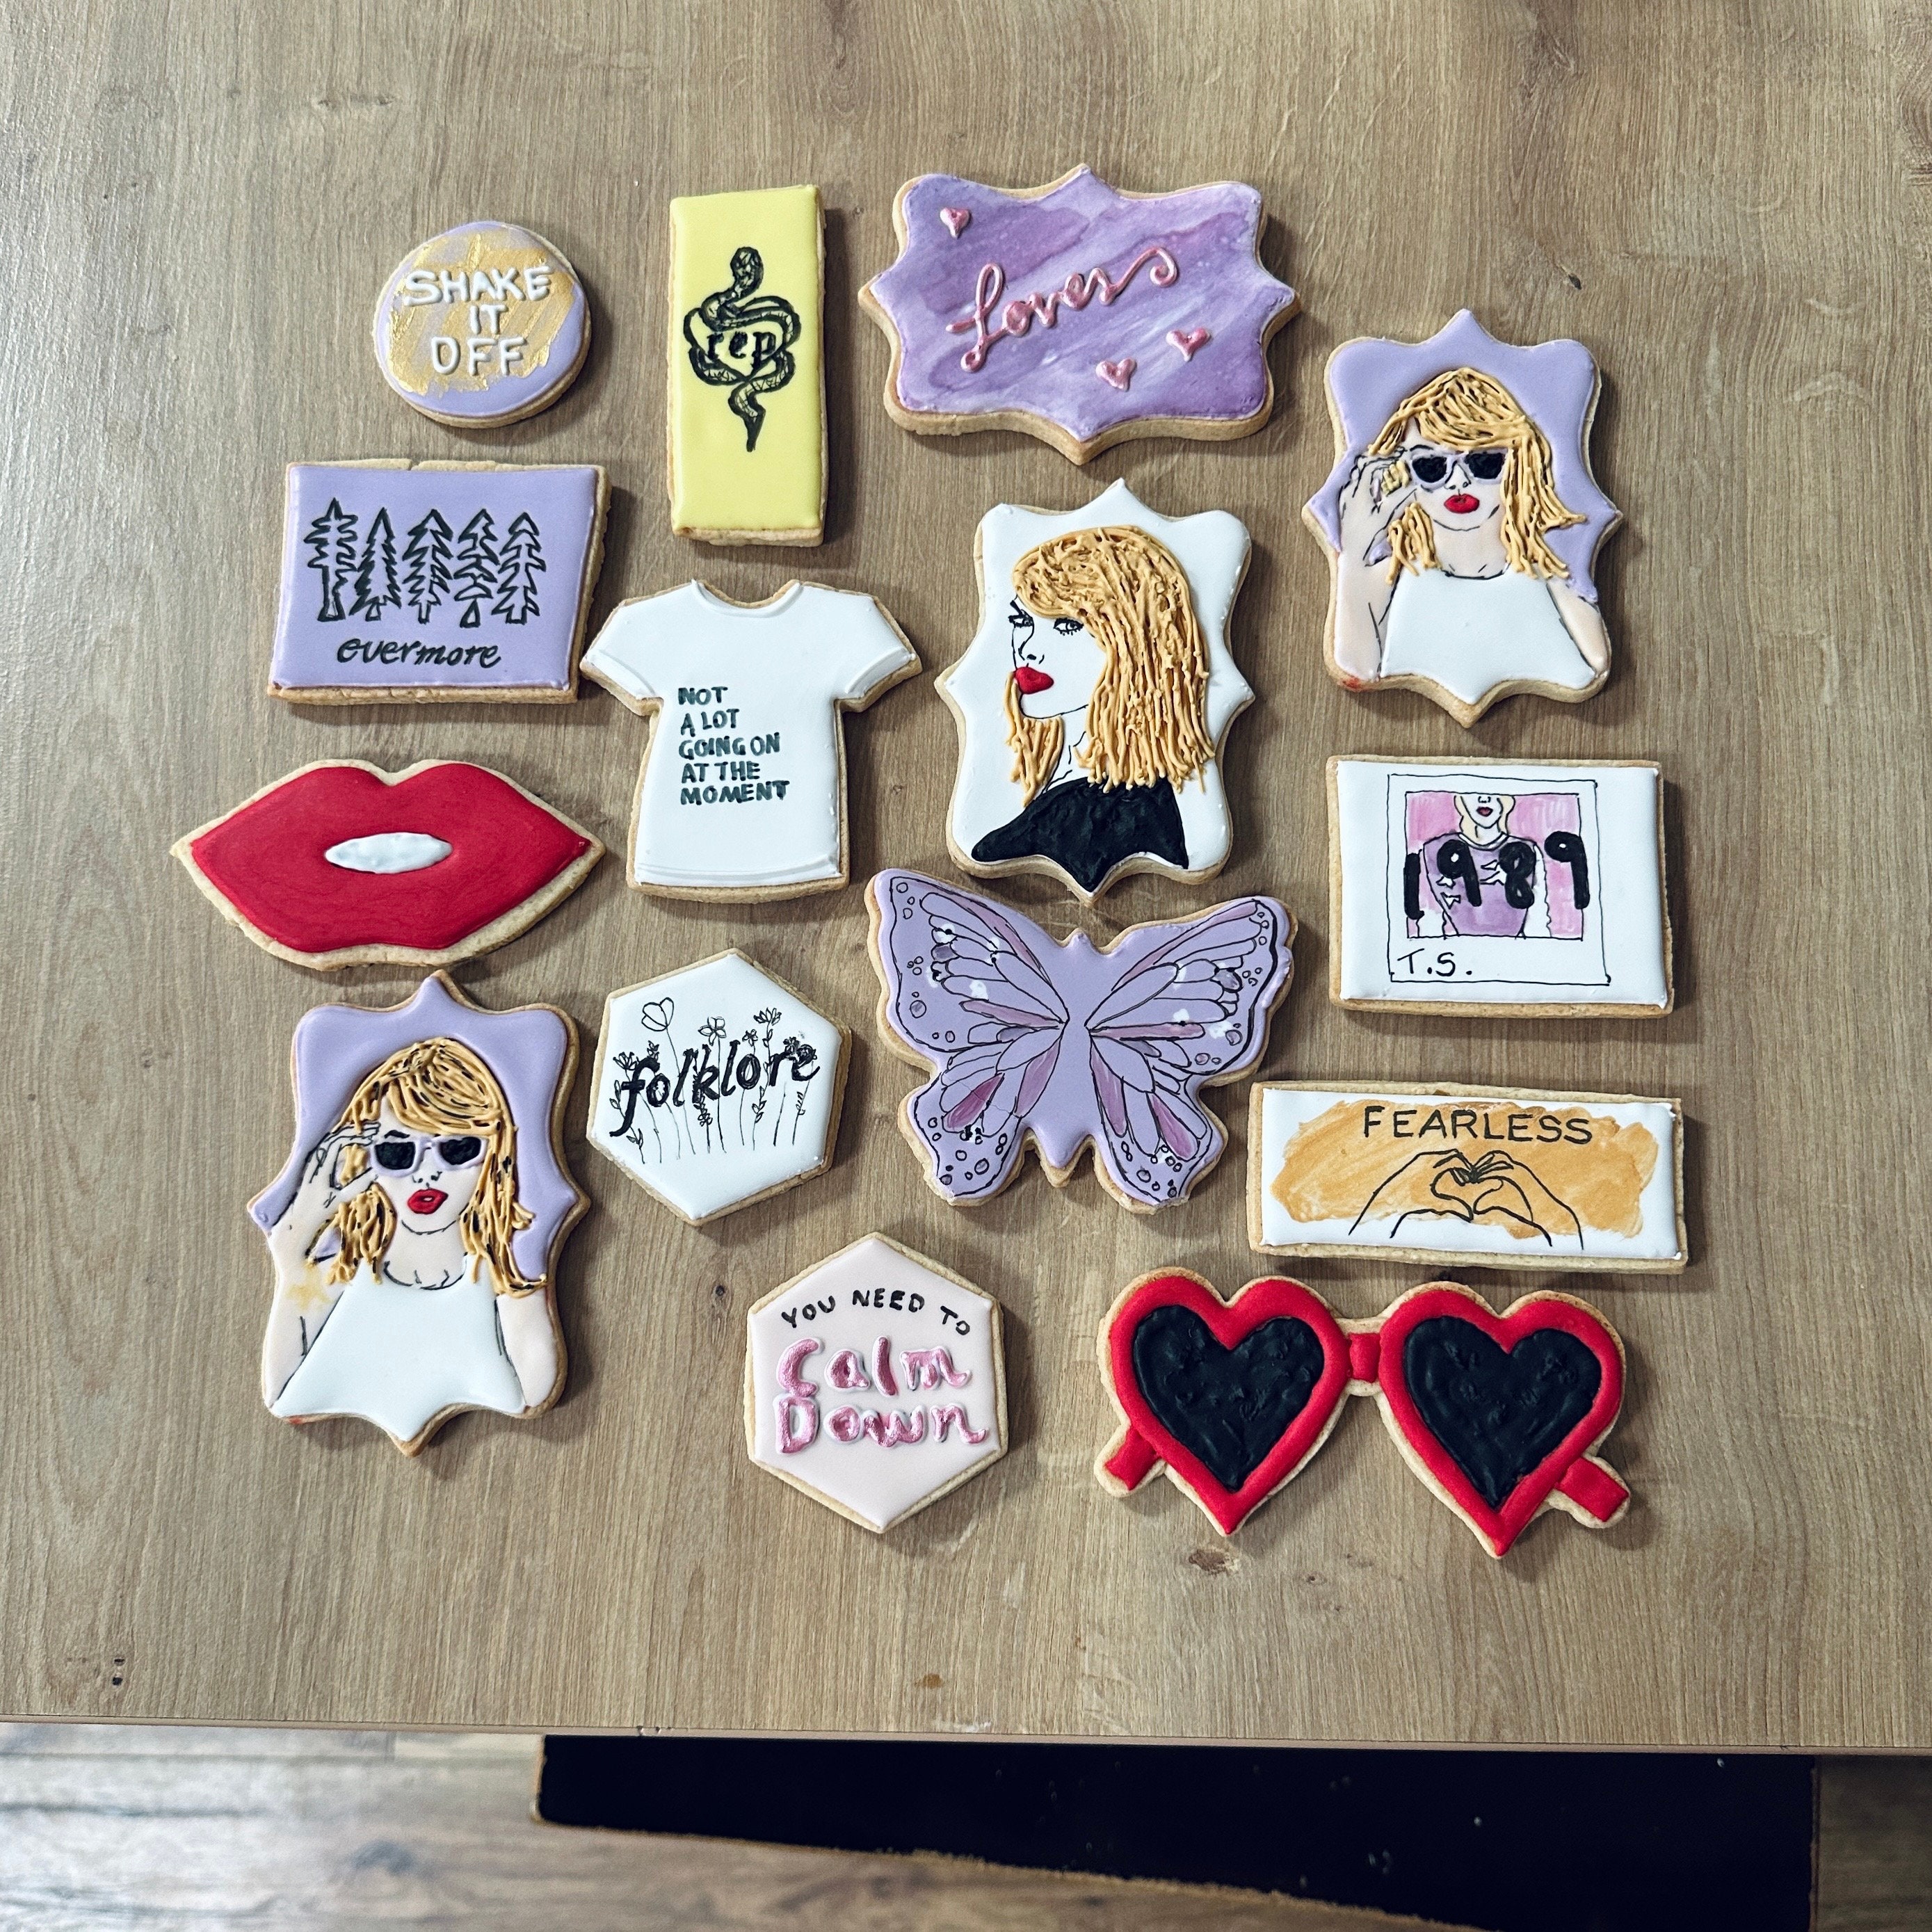 Swiftie cookies 🎶 #cookiesbychelsea #cookiedecorating #homebaker